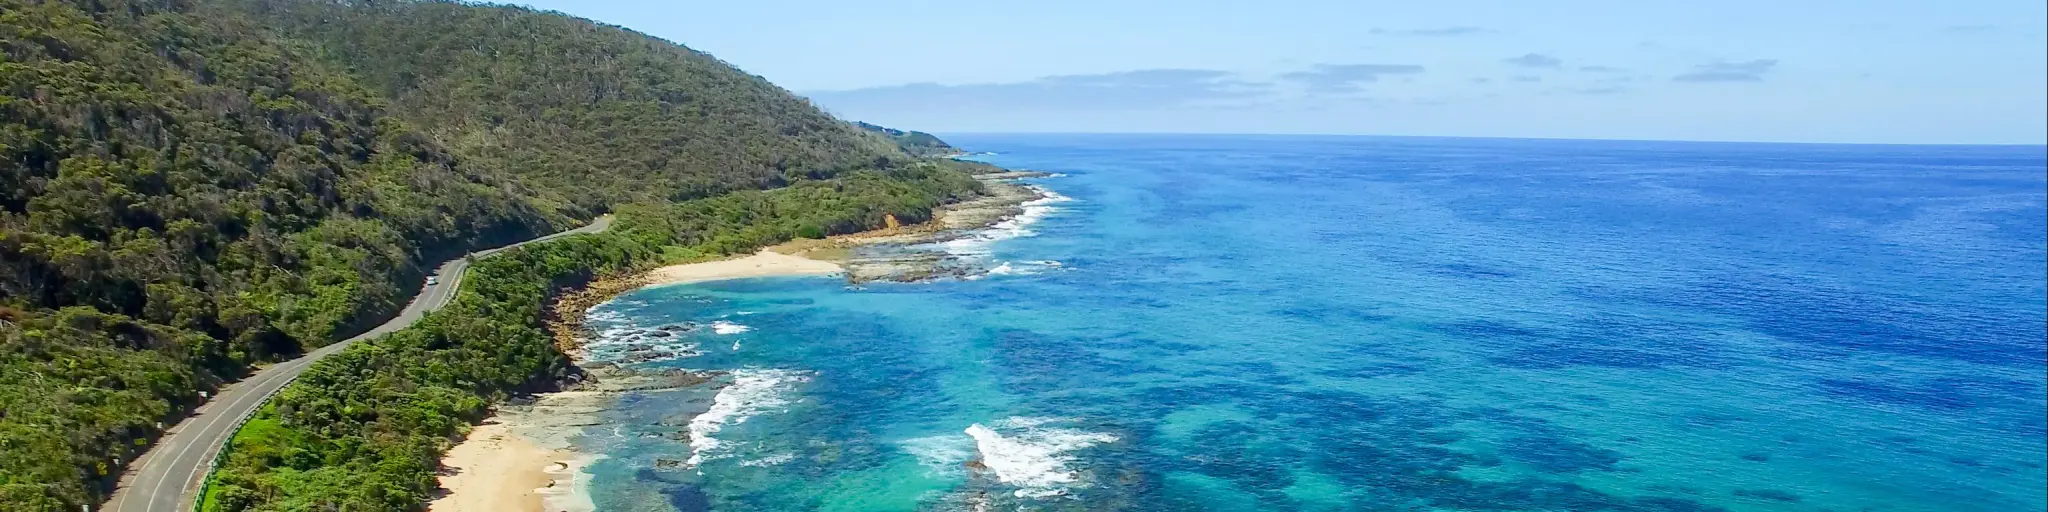 Overhead view of the Great Ocean Road coastline, Australia